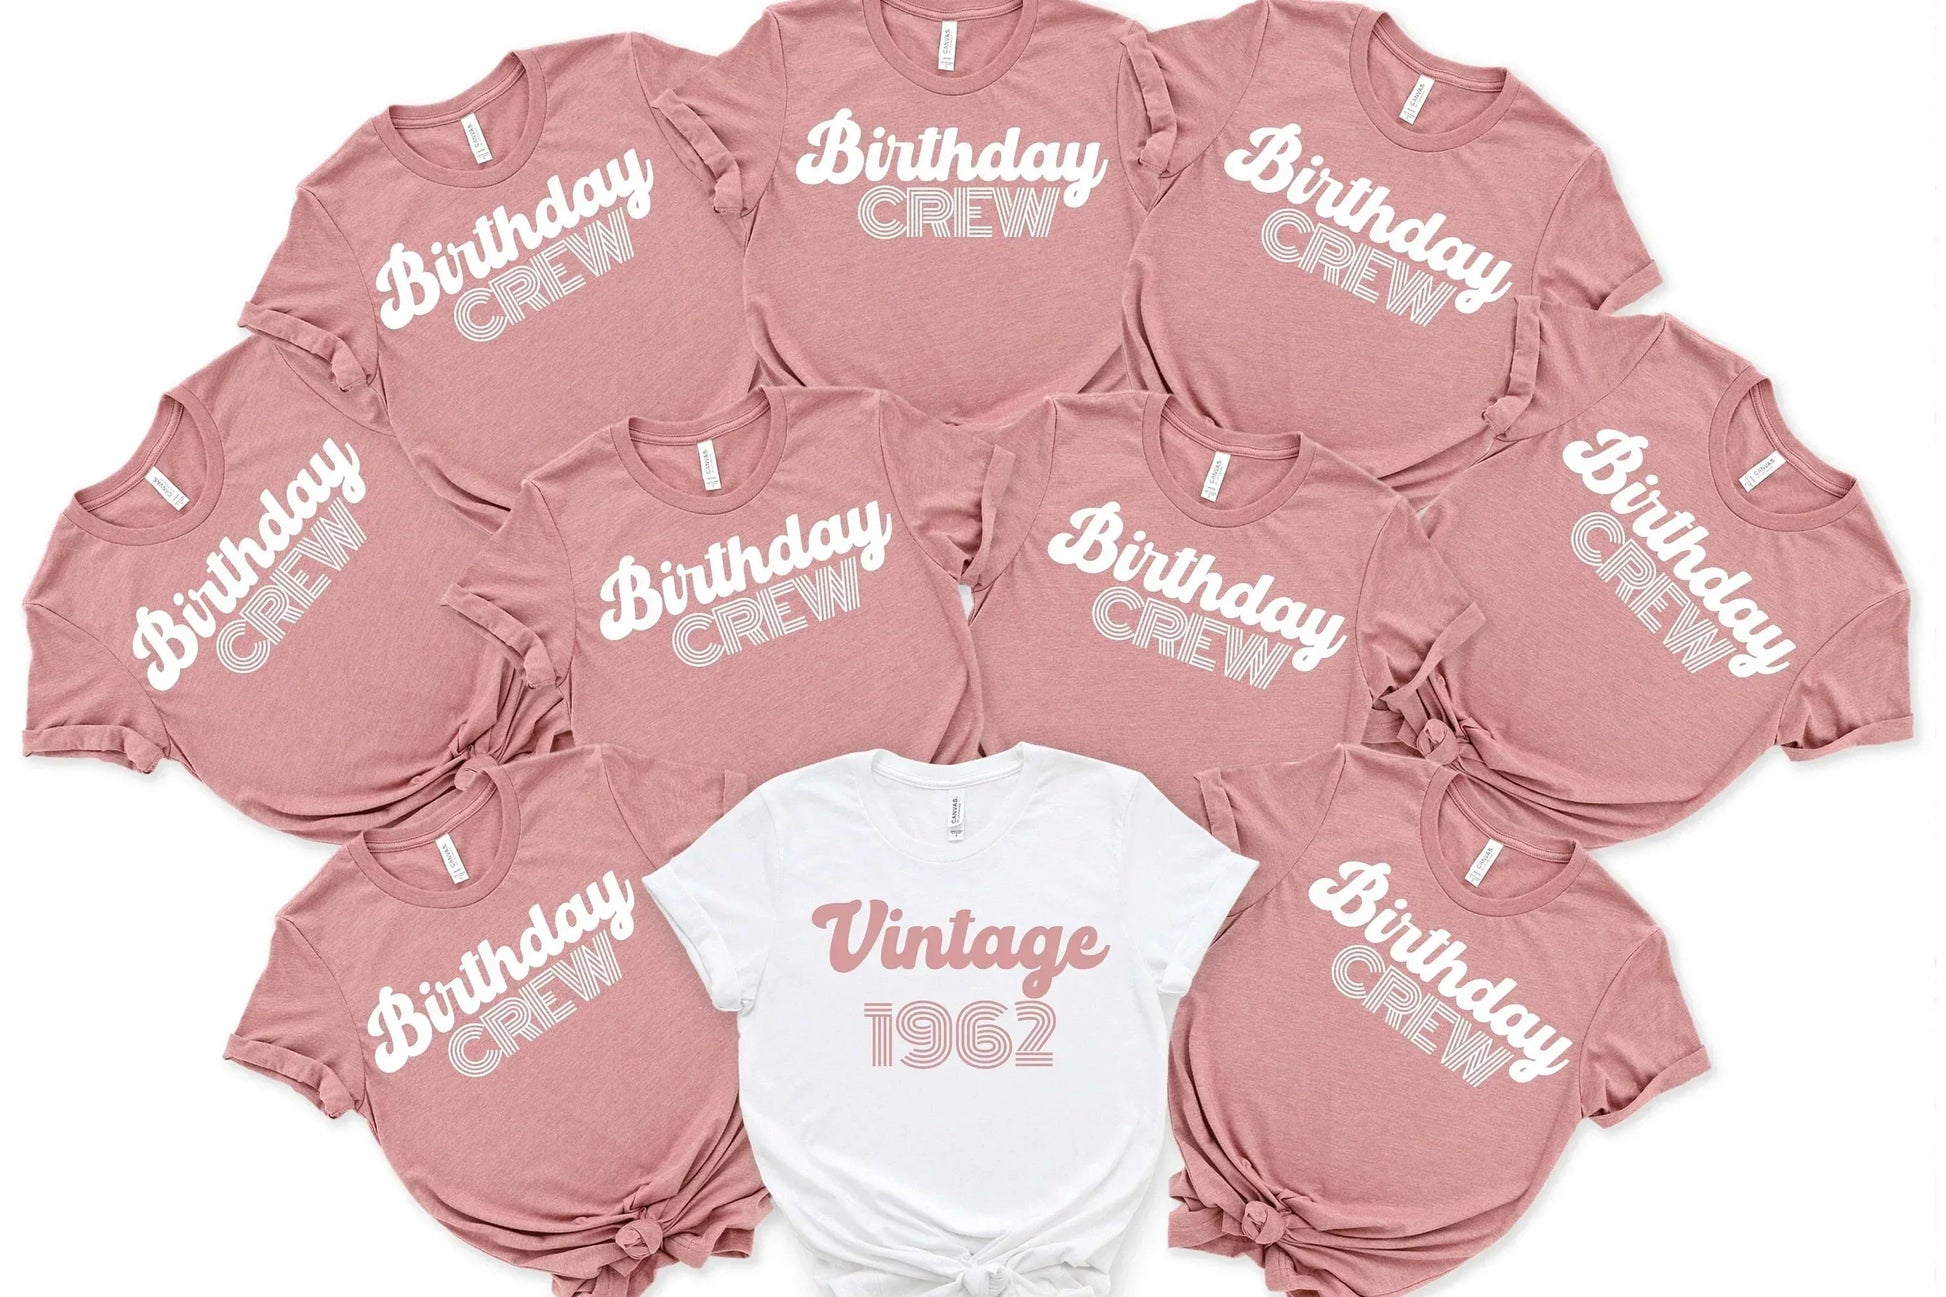 Vintage Sixty Birthday Crew, Birthday Squad, 60th Birthday Tee, Birthday Gift, Birthday Party Tees, Gift for Her, Birthday Group Shirt